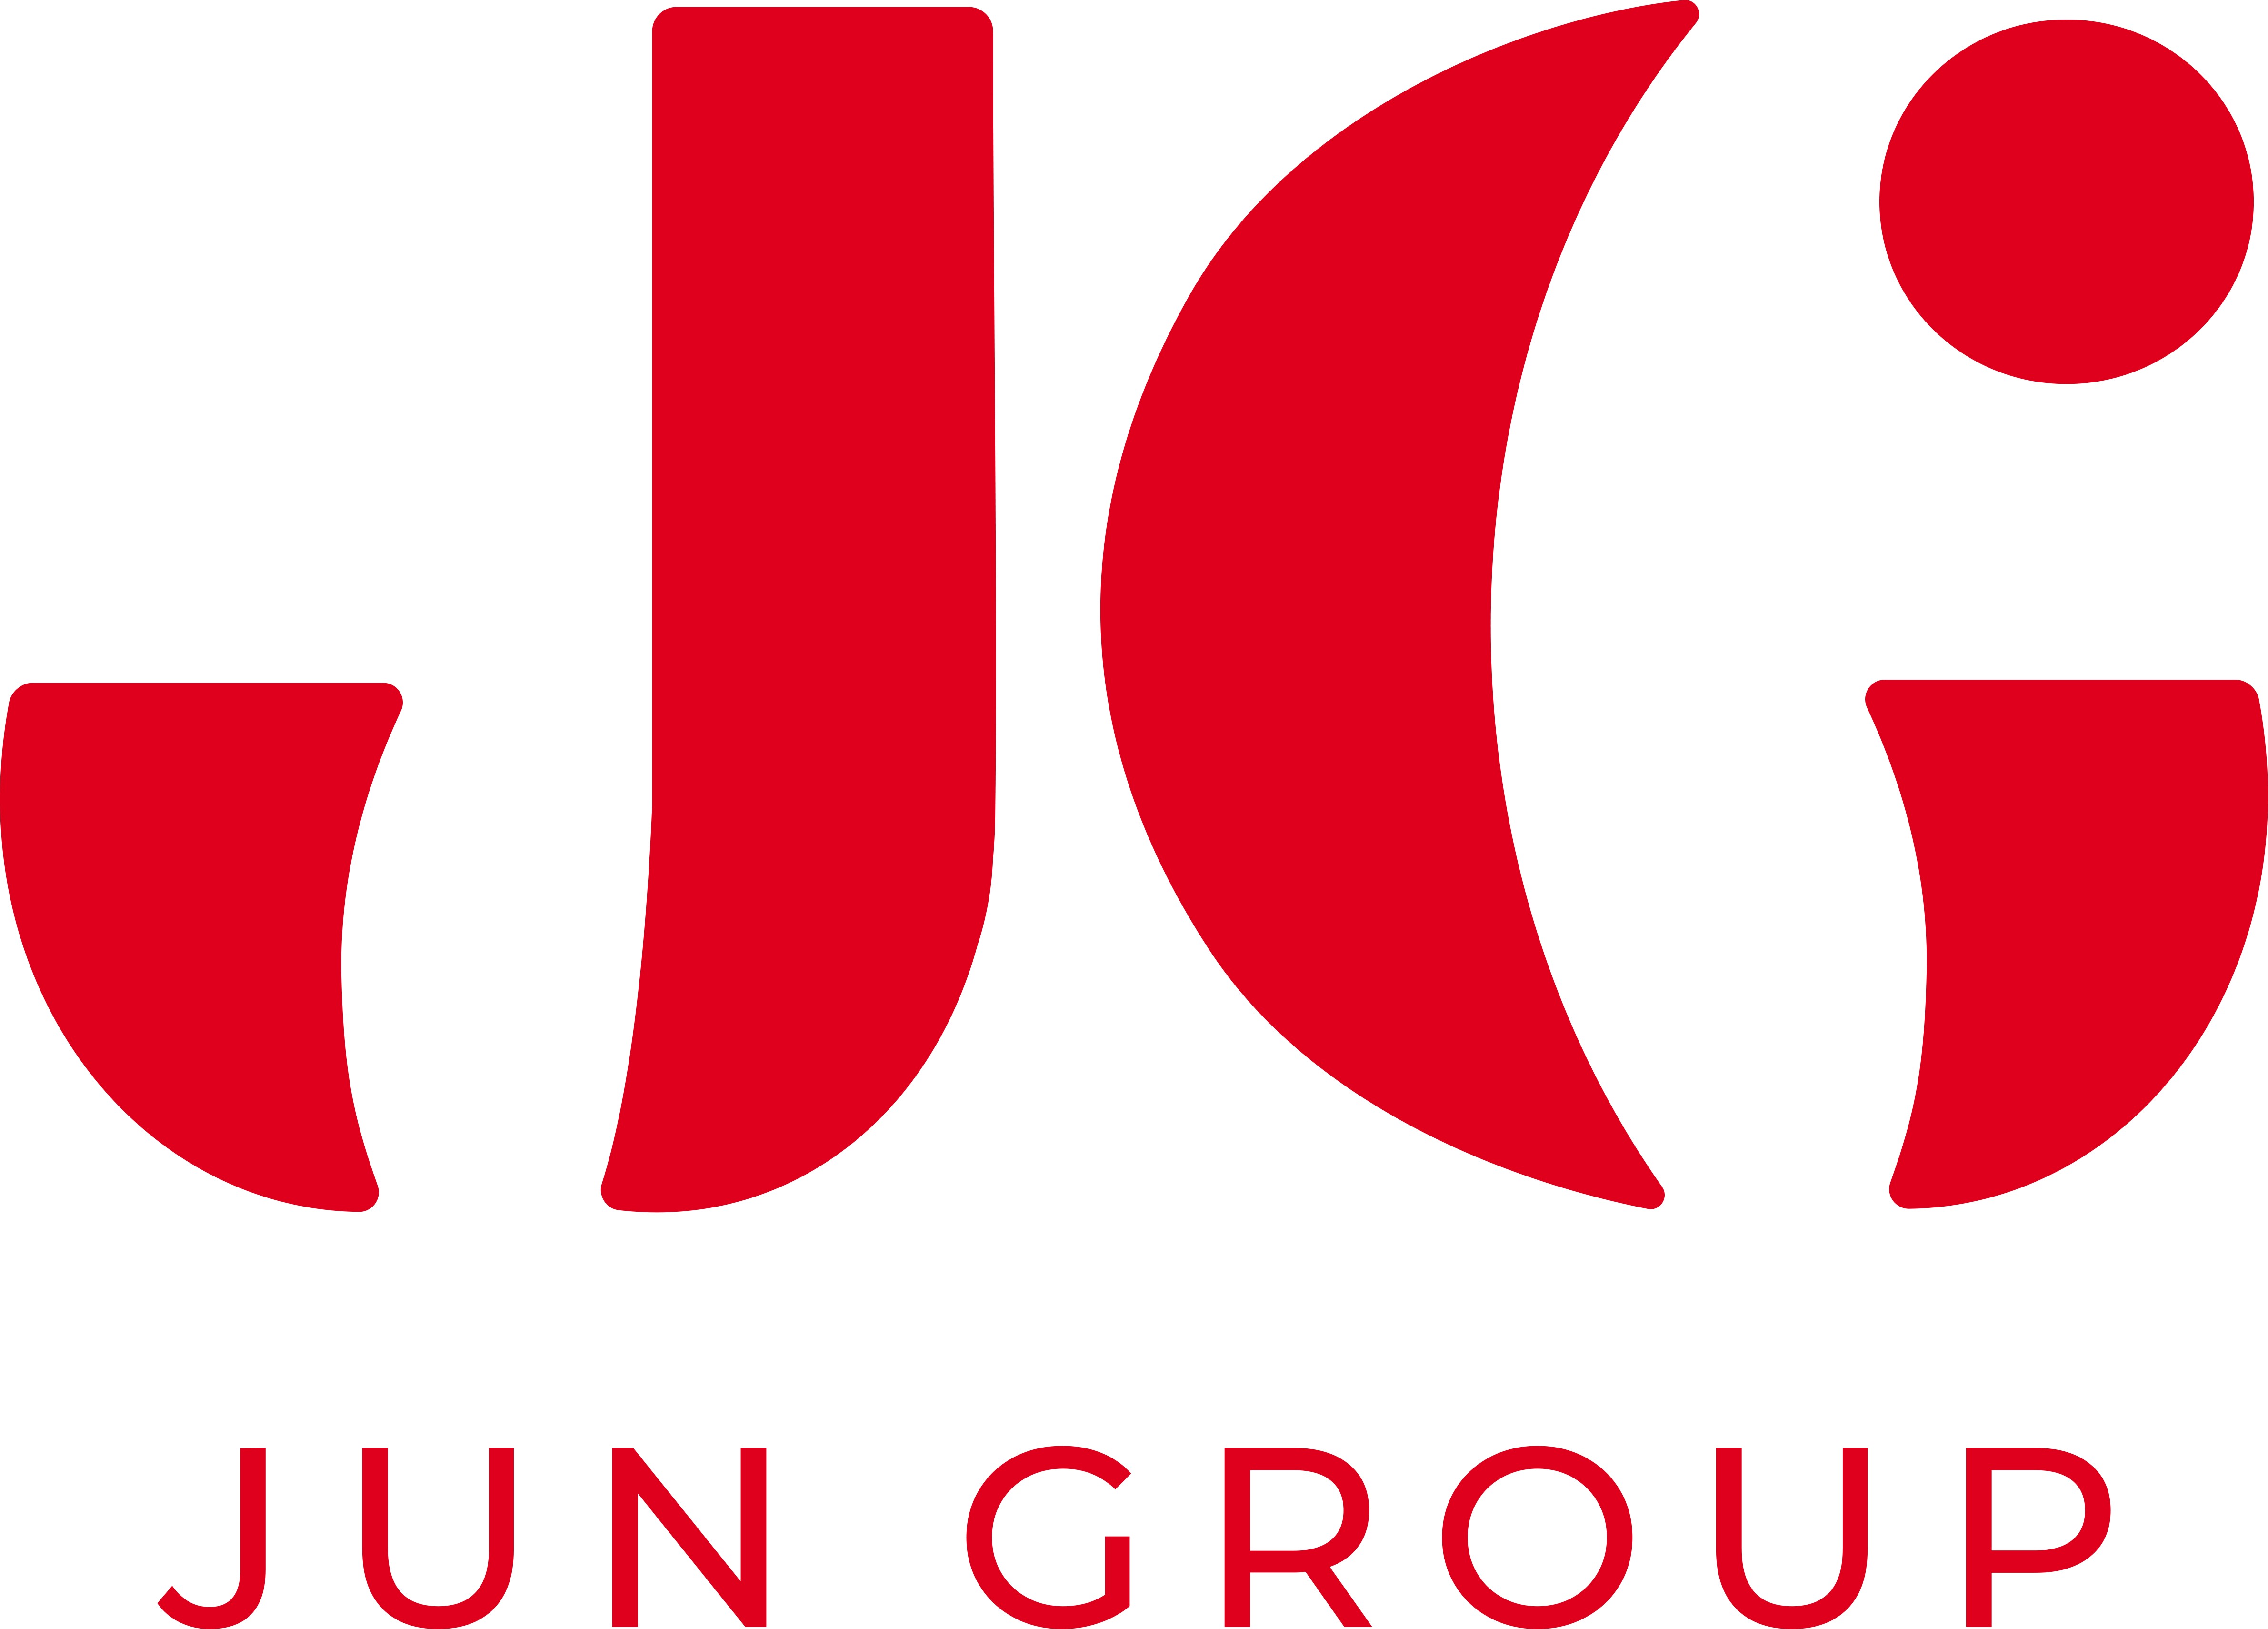 Jun Group Logo (February 2020).jpg